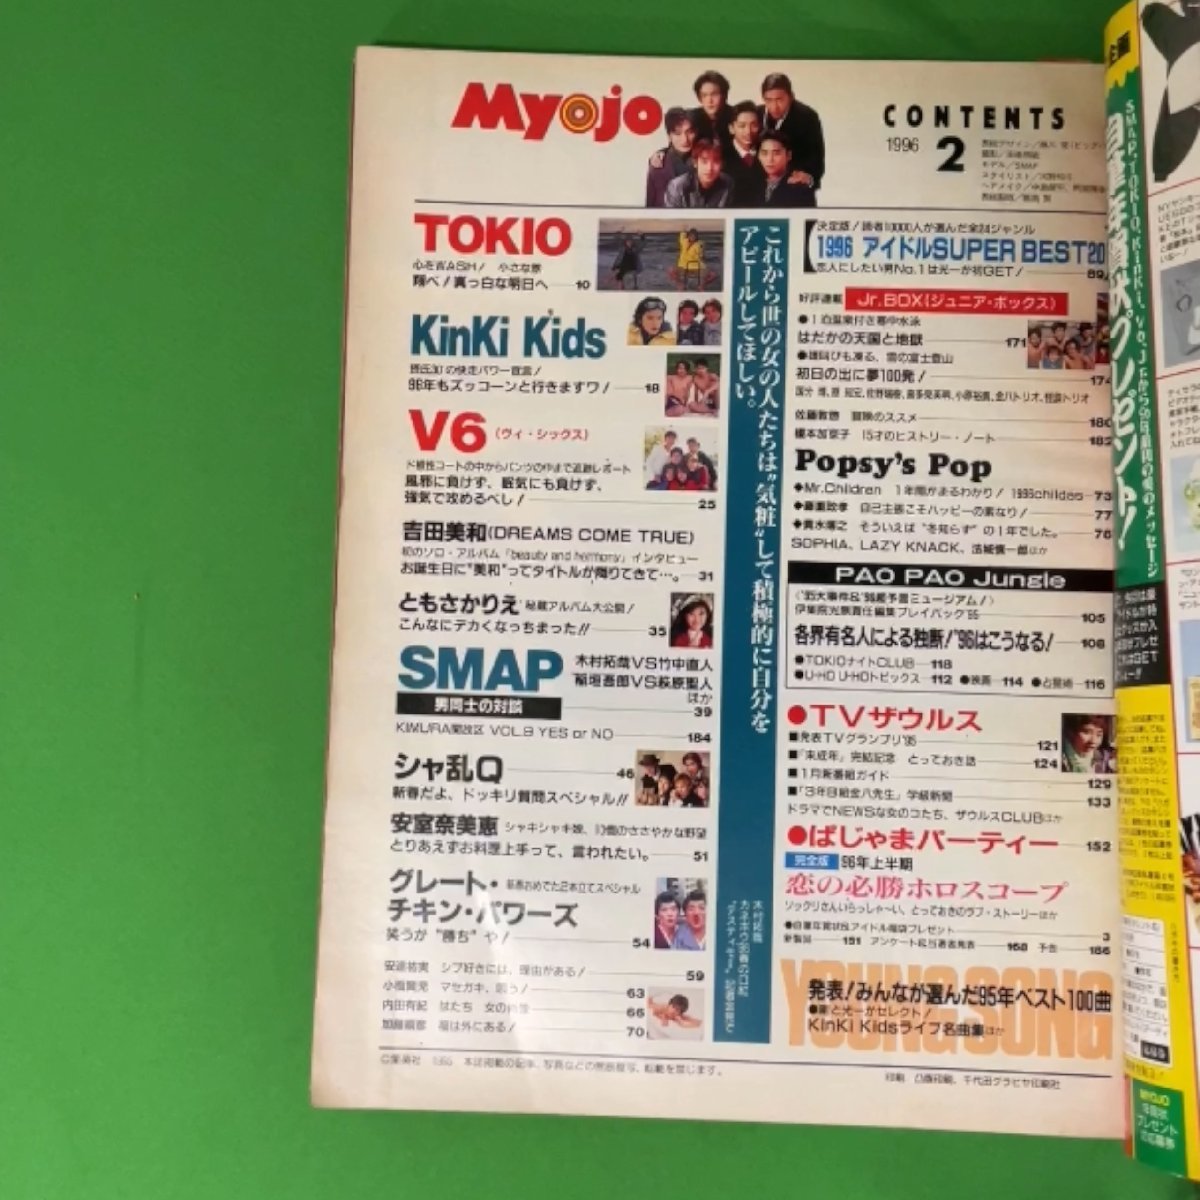 Myojo 明星 1996年2月1日発行 平成8年 人間ライブマガジン SMAP 森且行 森くん TOKIO KinkKids V6 ジャニーズJr. 新年特大号 シャ乱Q_画像4